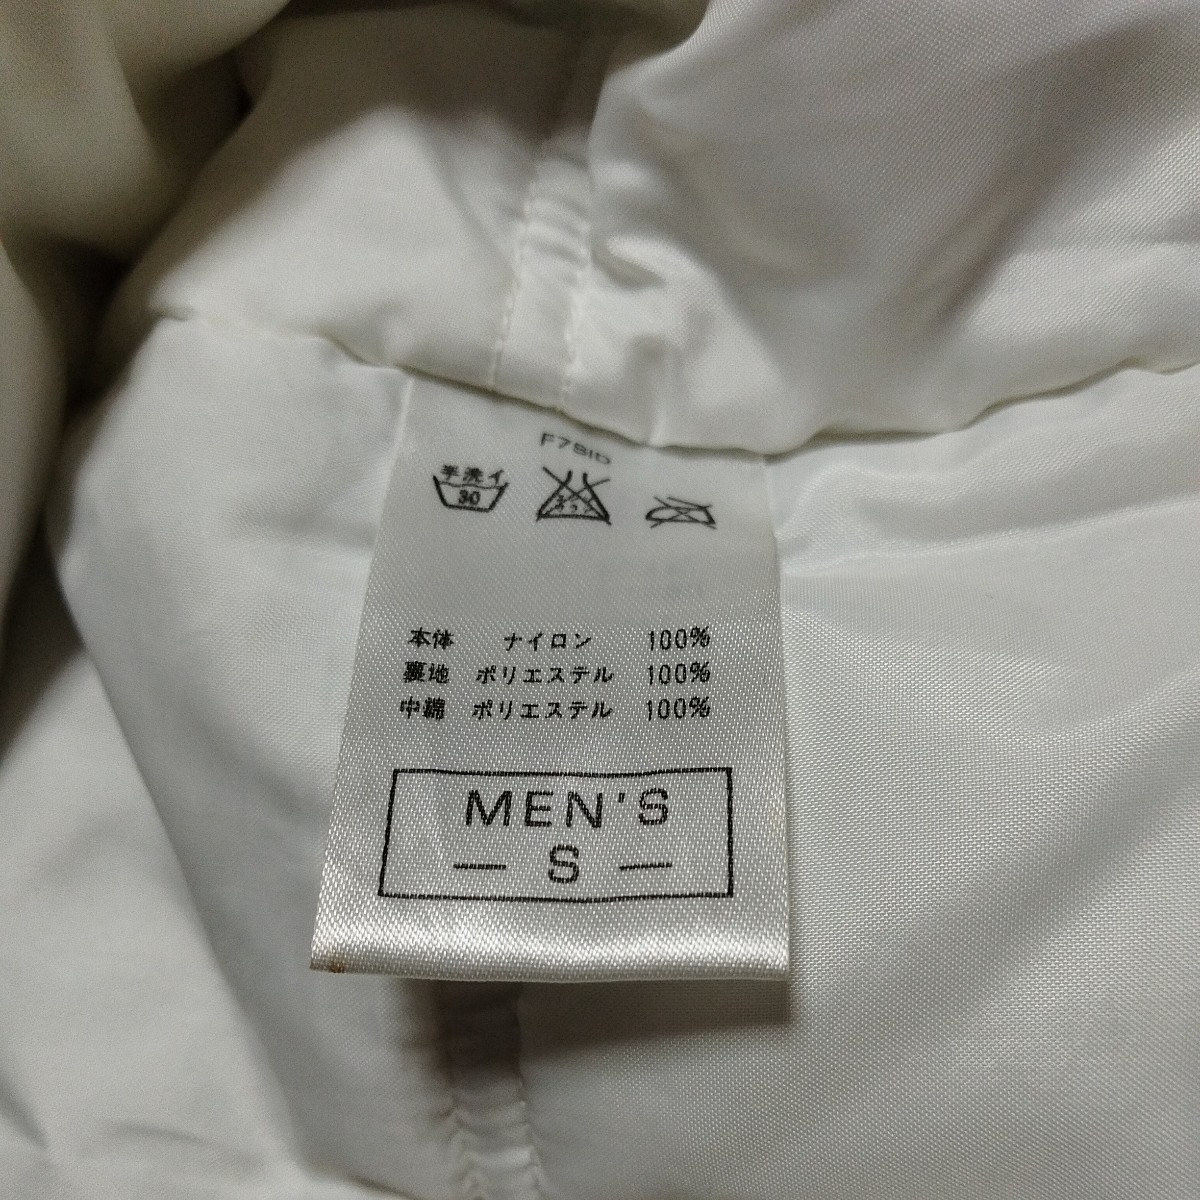  Nike NIKE bench coat cotton inside S used navy Vietnam made 